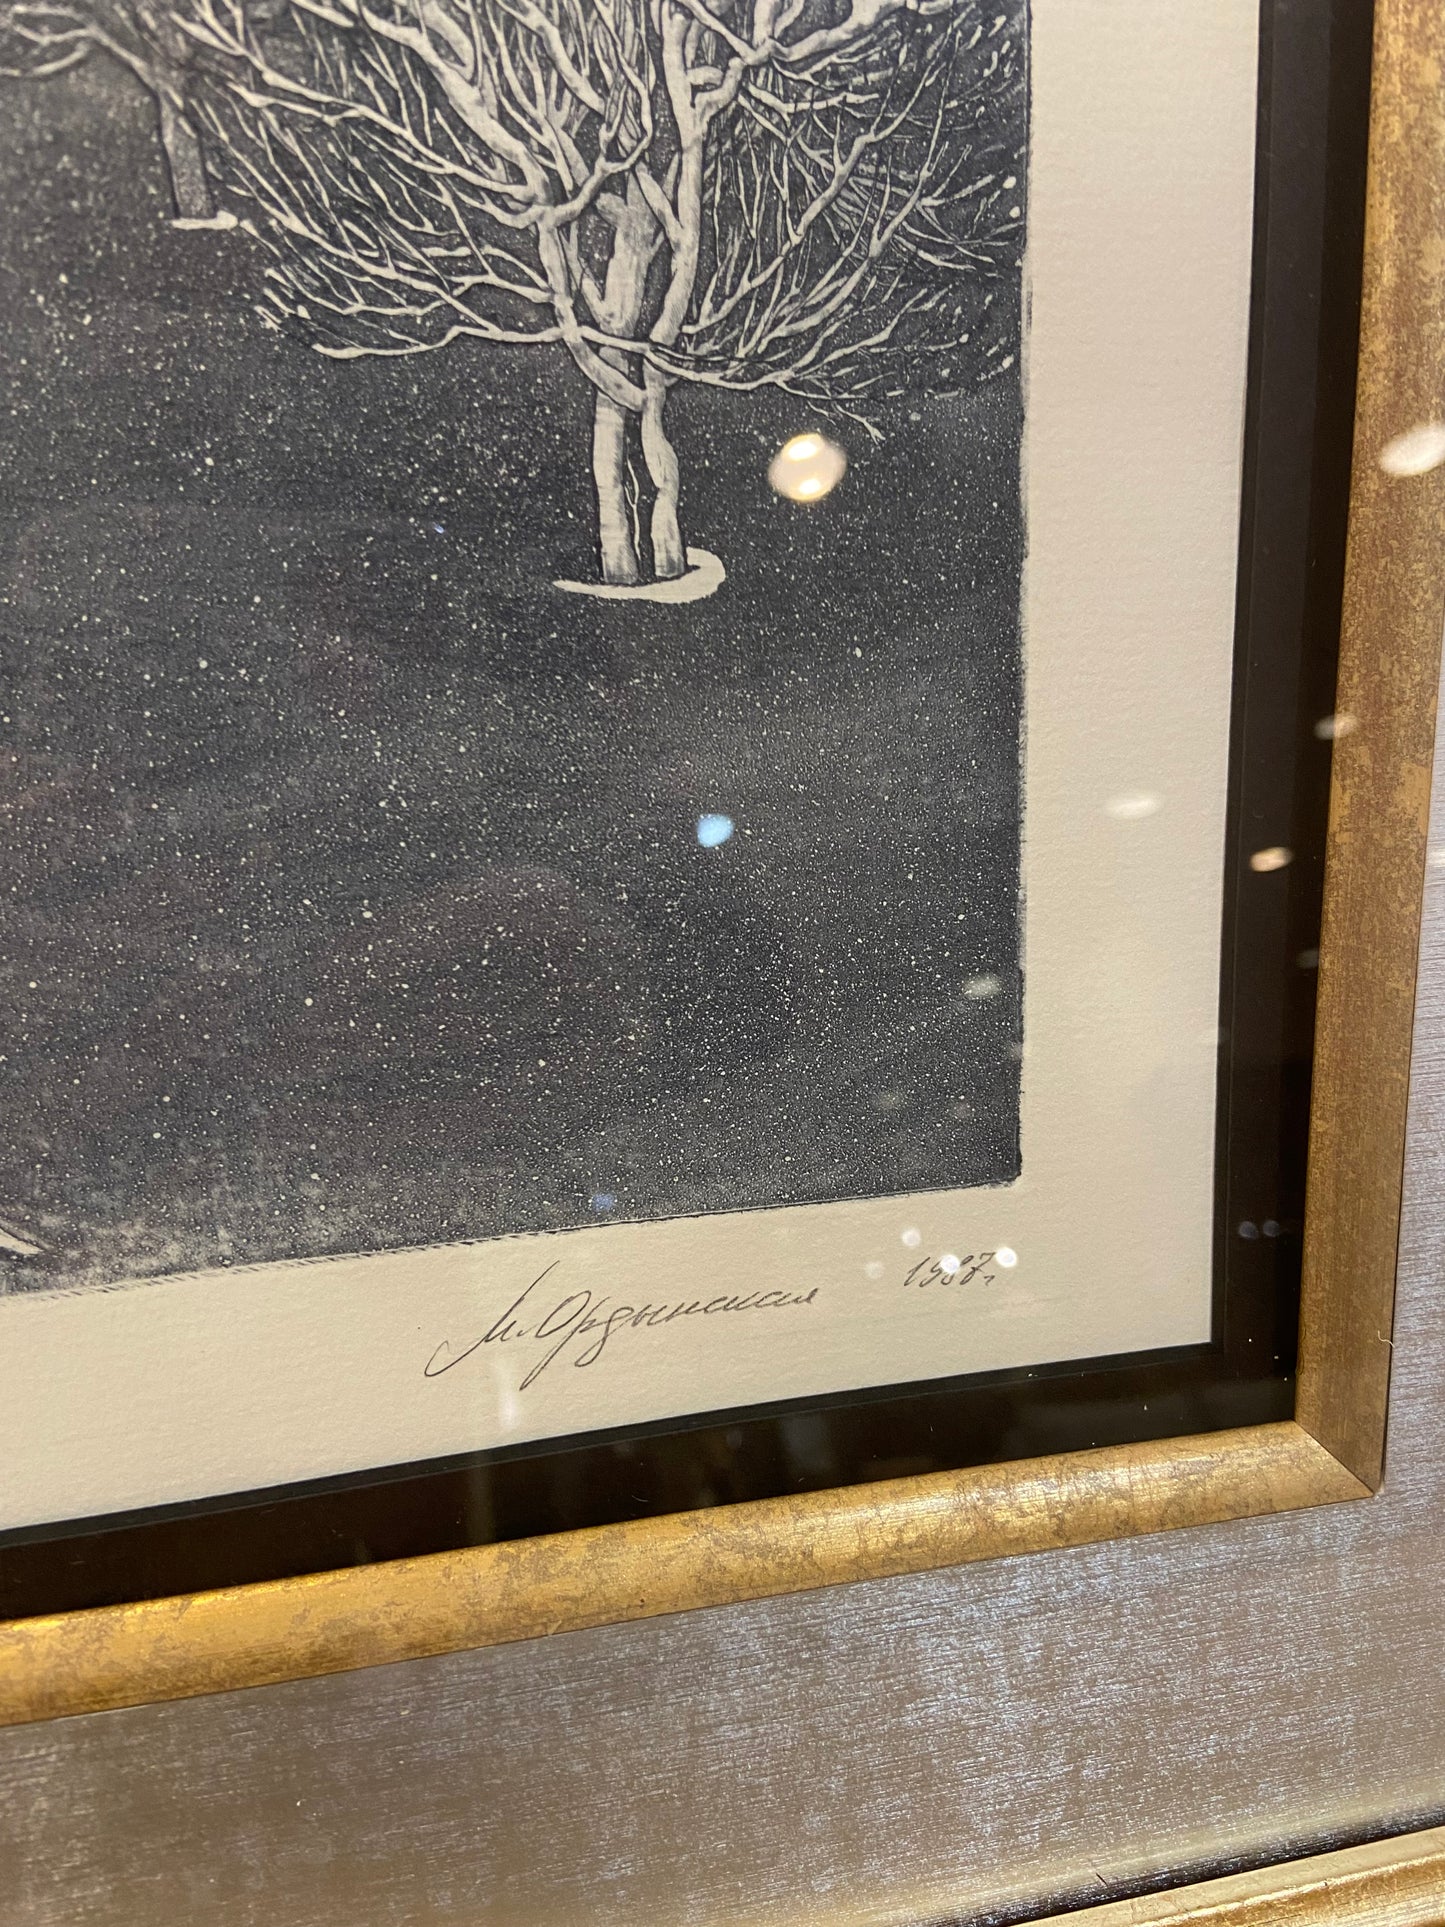 Man in Trees Engraving 1987 (27177)